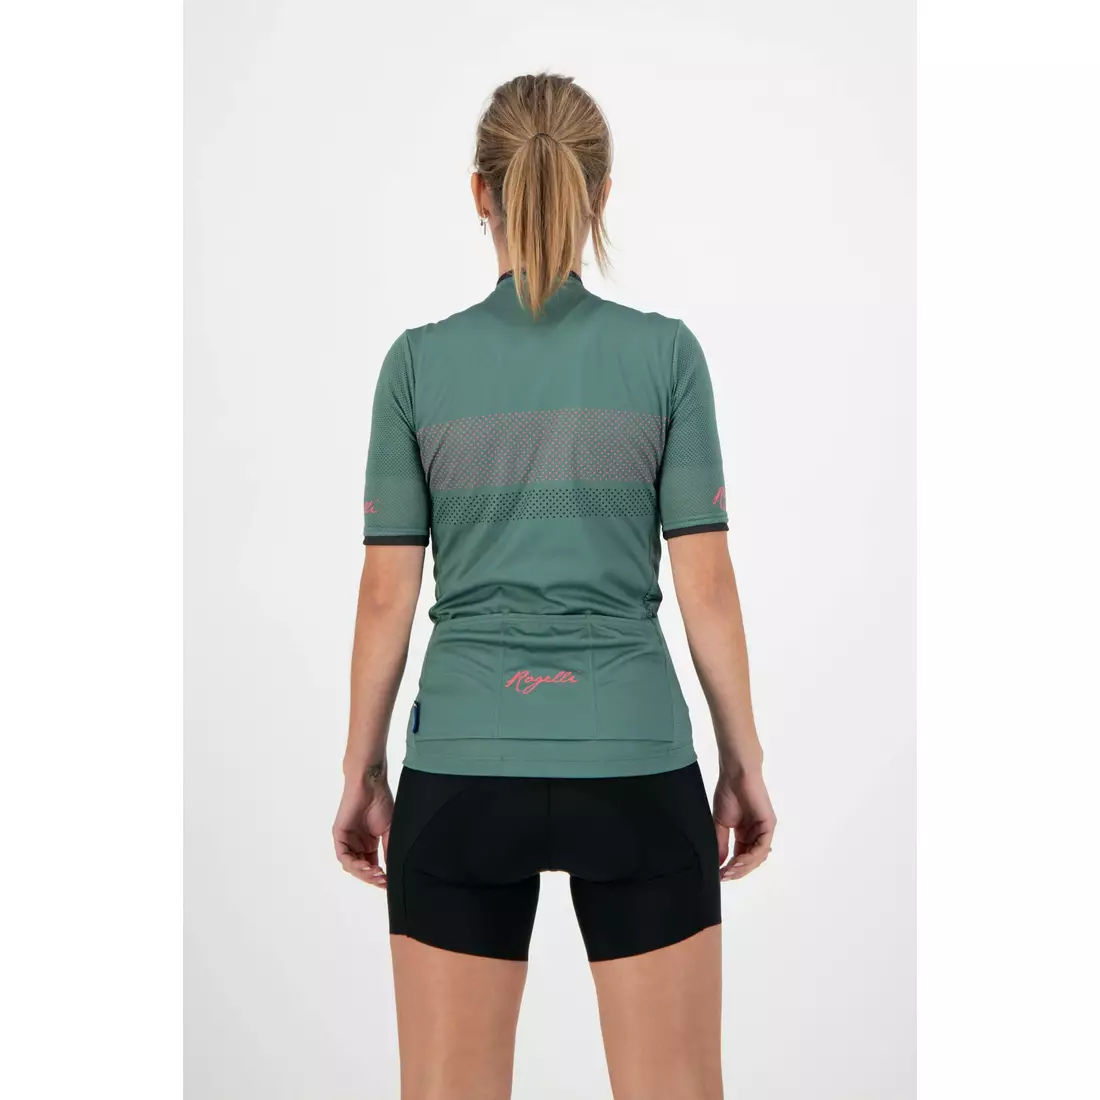 ROGELLI women's cycling jersey PURPOSE green 010.089